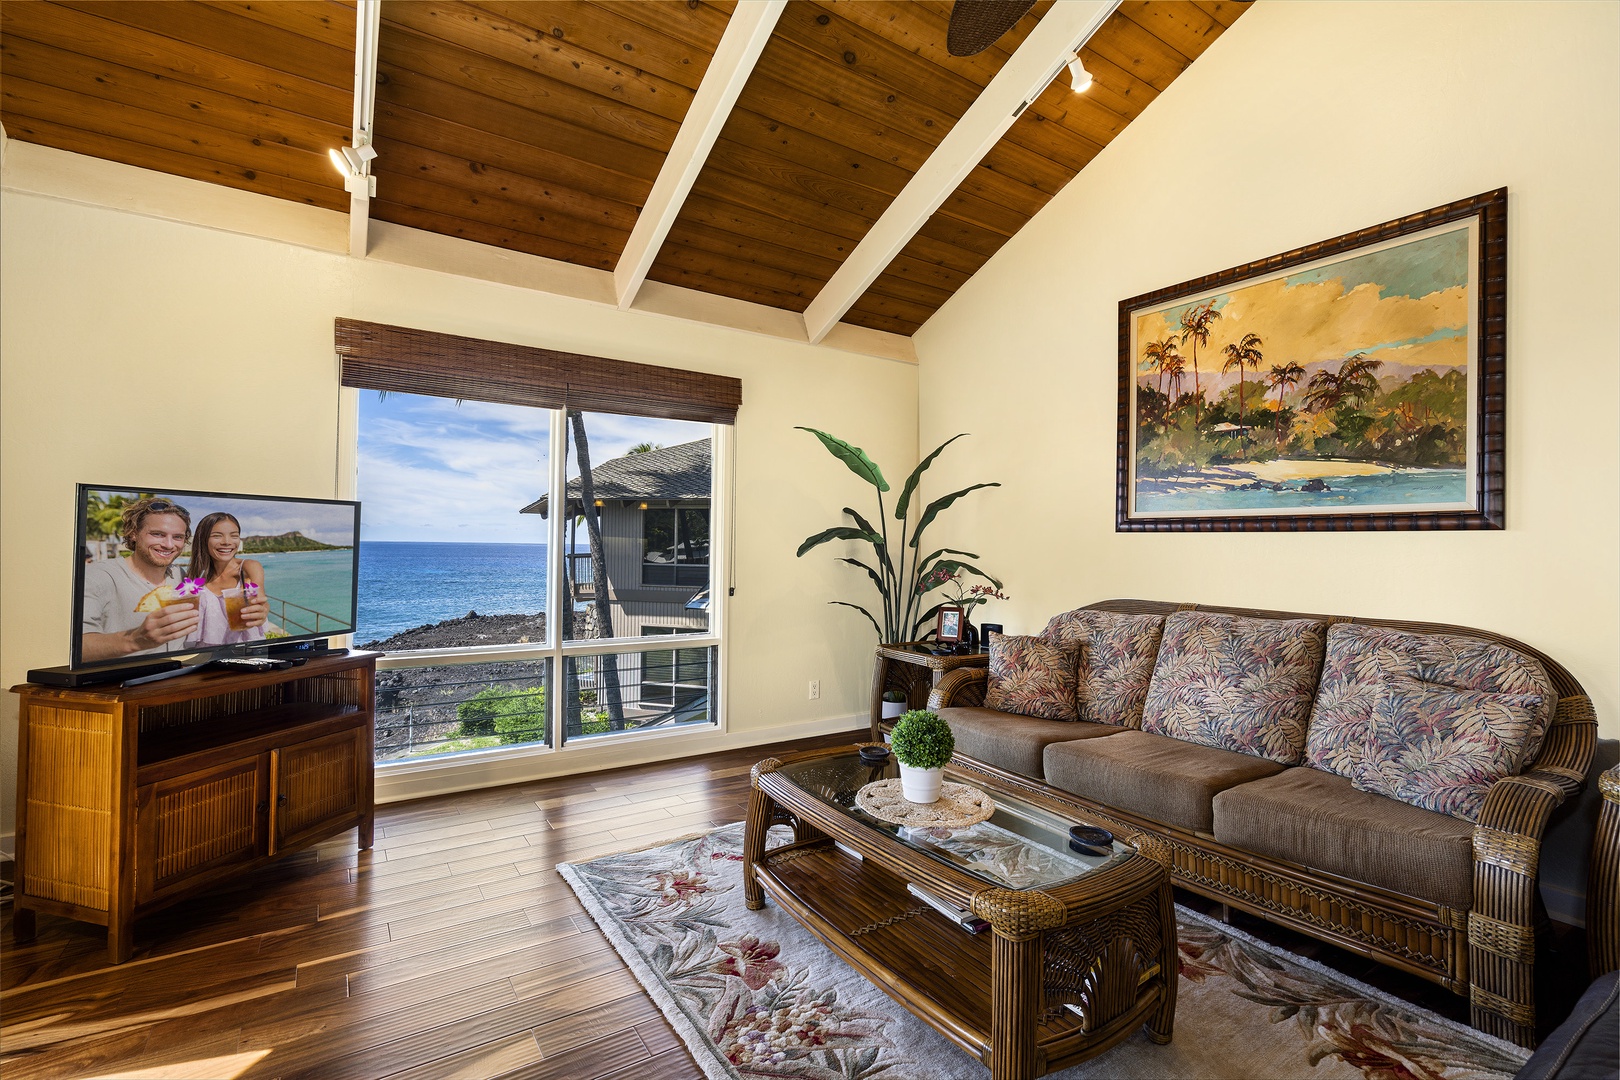 Kailua Kona Vacation Rentals, Kanaloa at Kona 3304 - Open sight lines and vaulted ceilings make this living room!